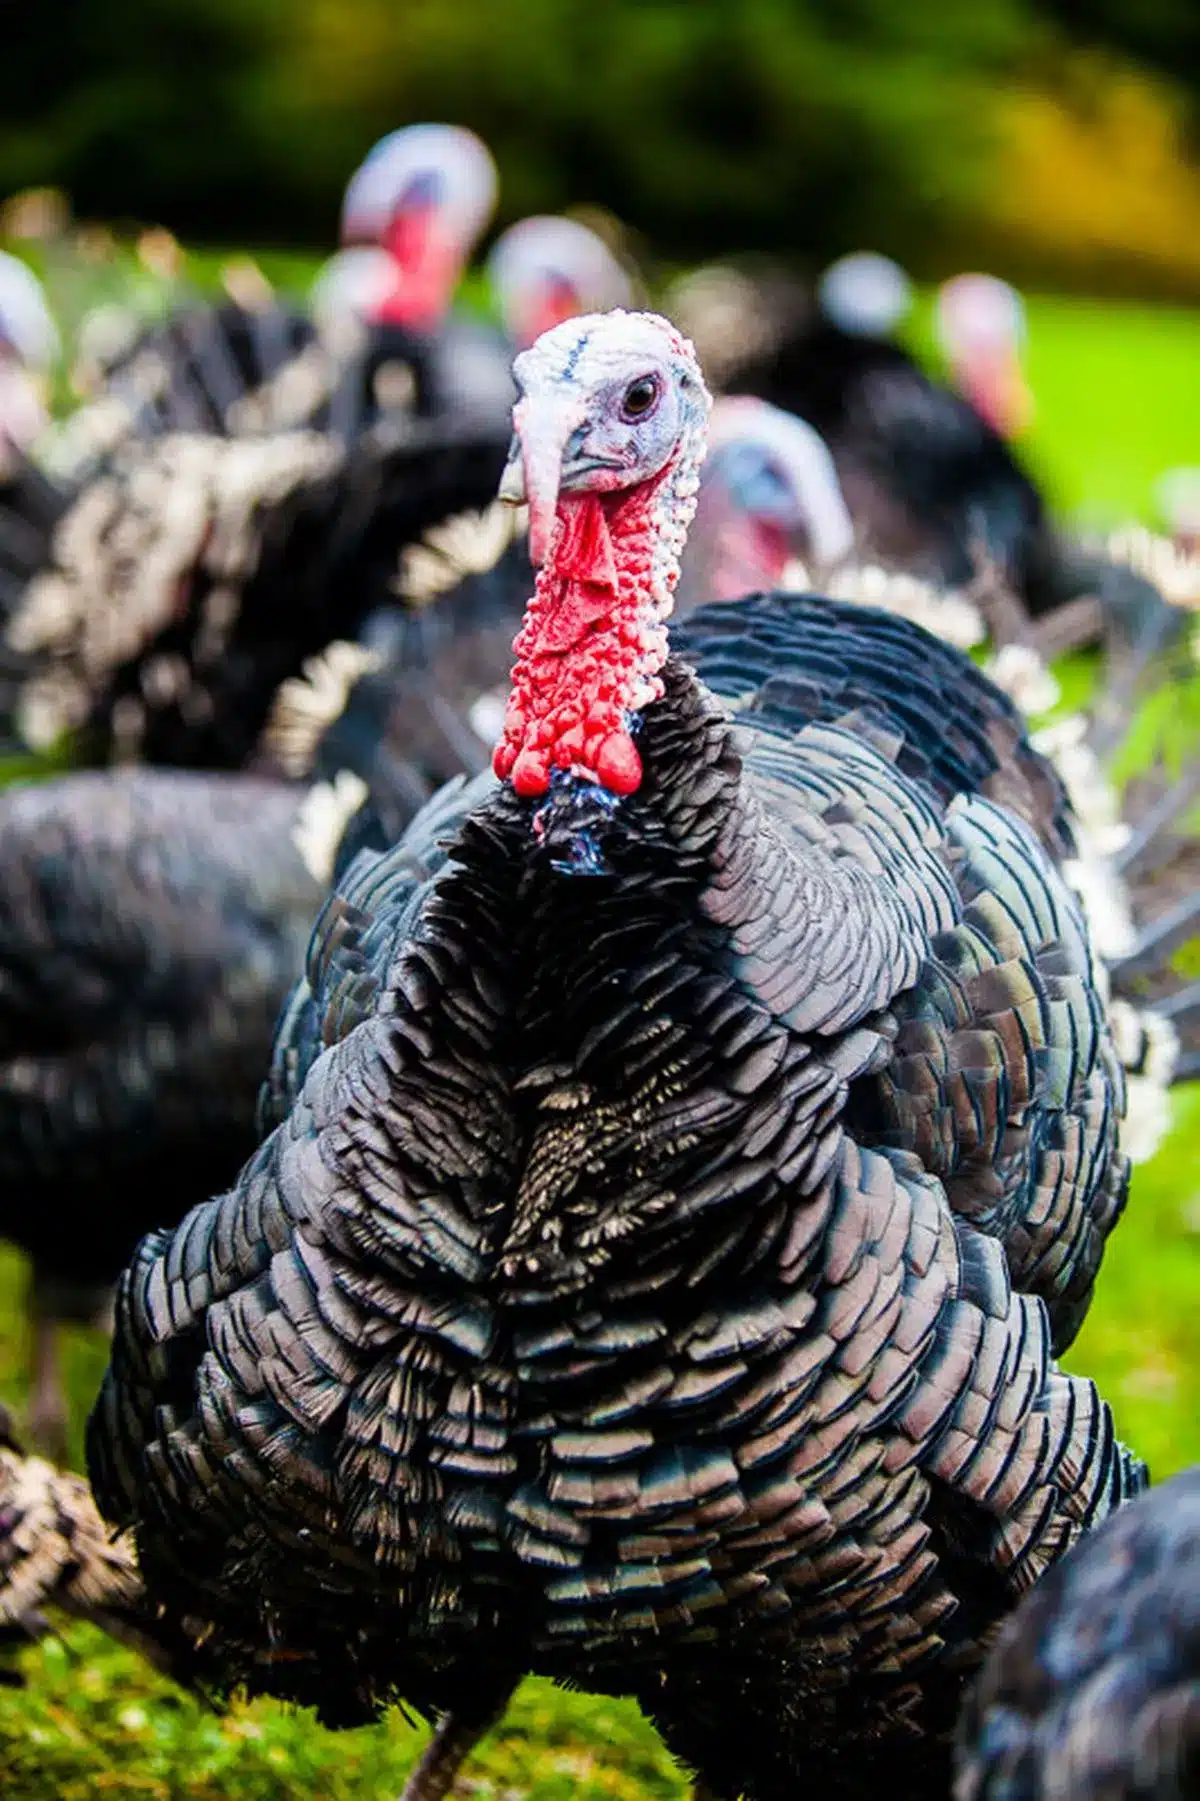 0 im an organic farmer bird flu could hit turkey numbers this christmas